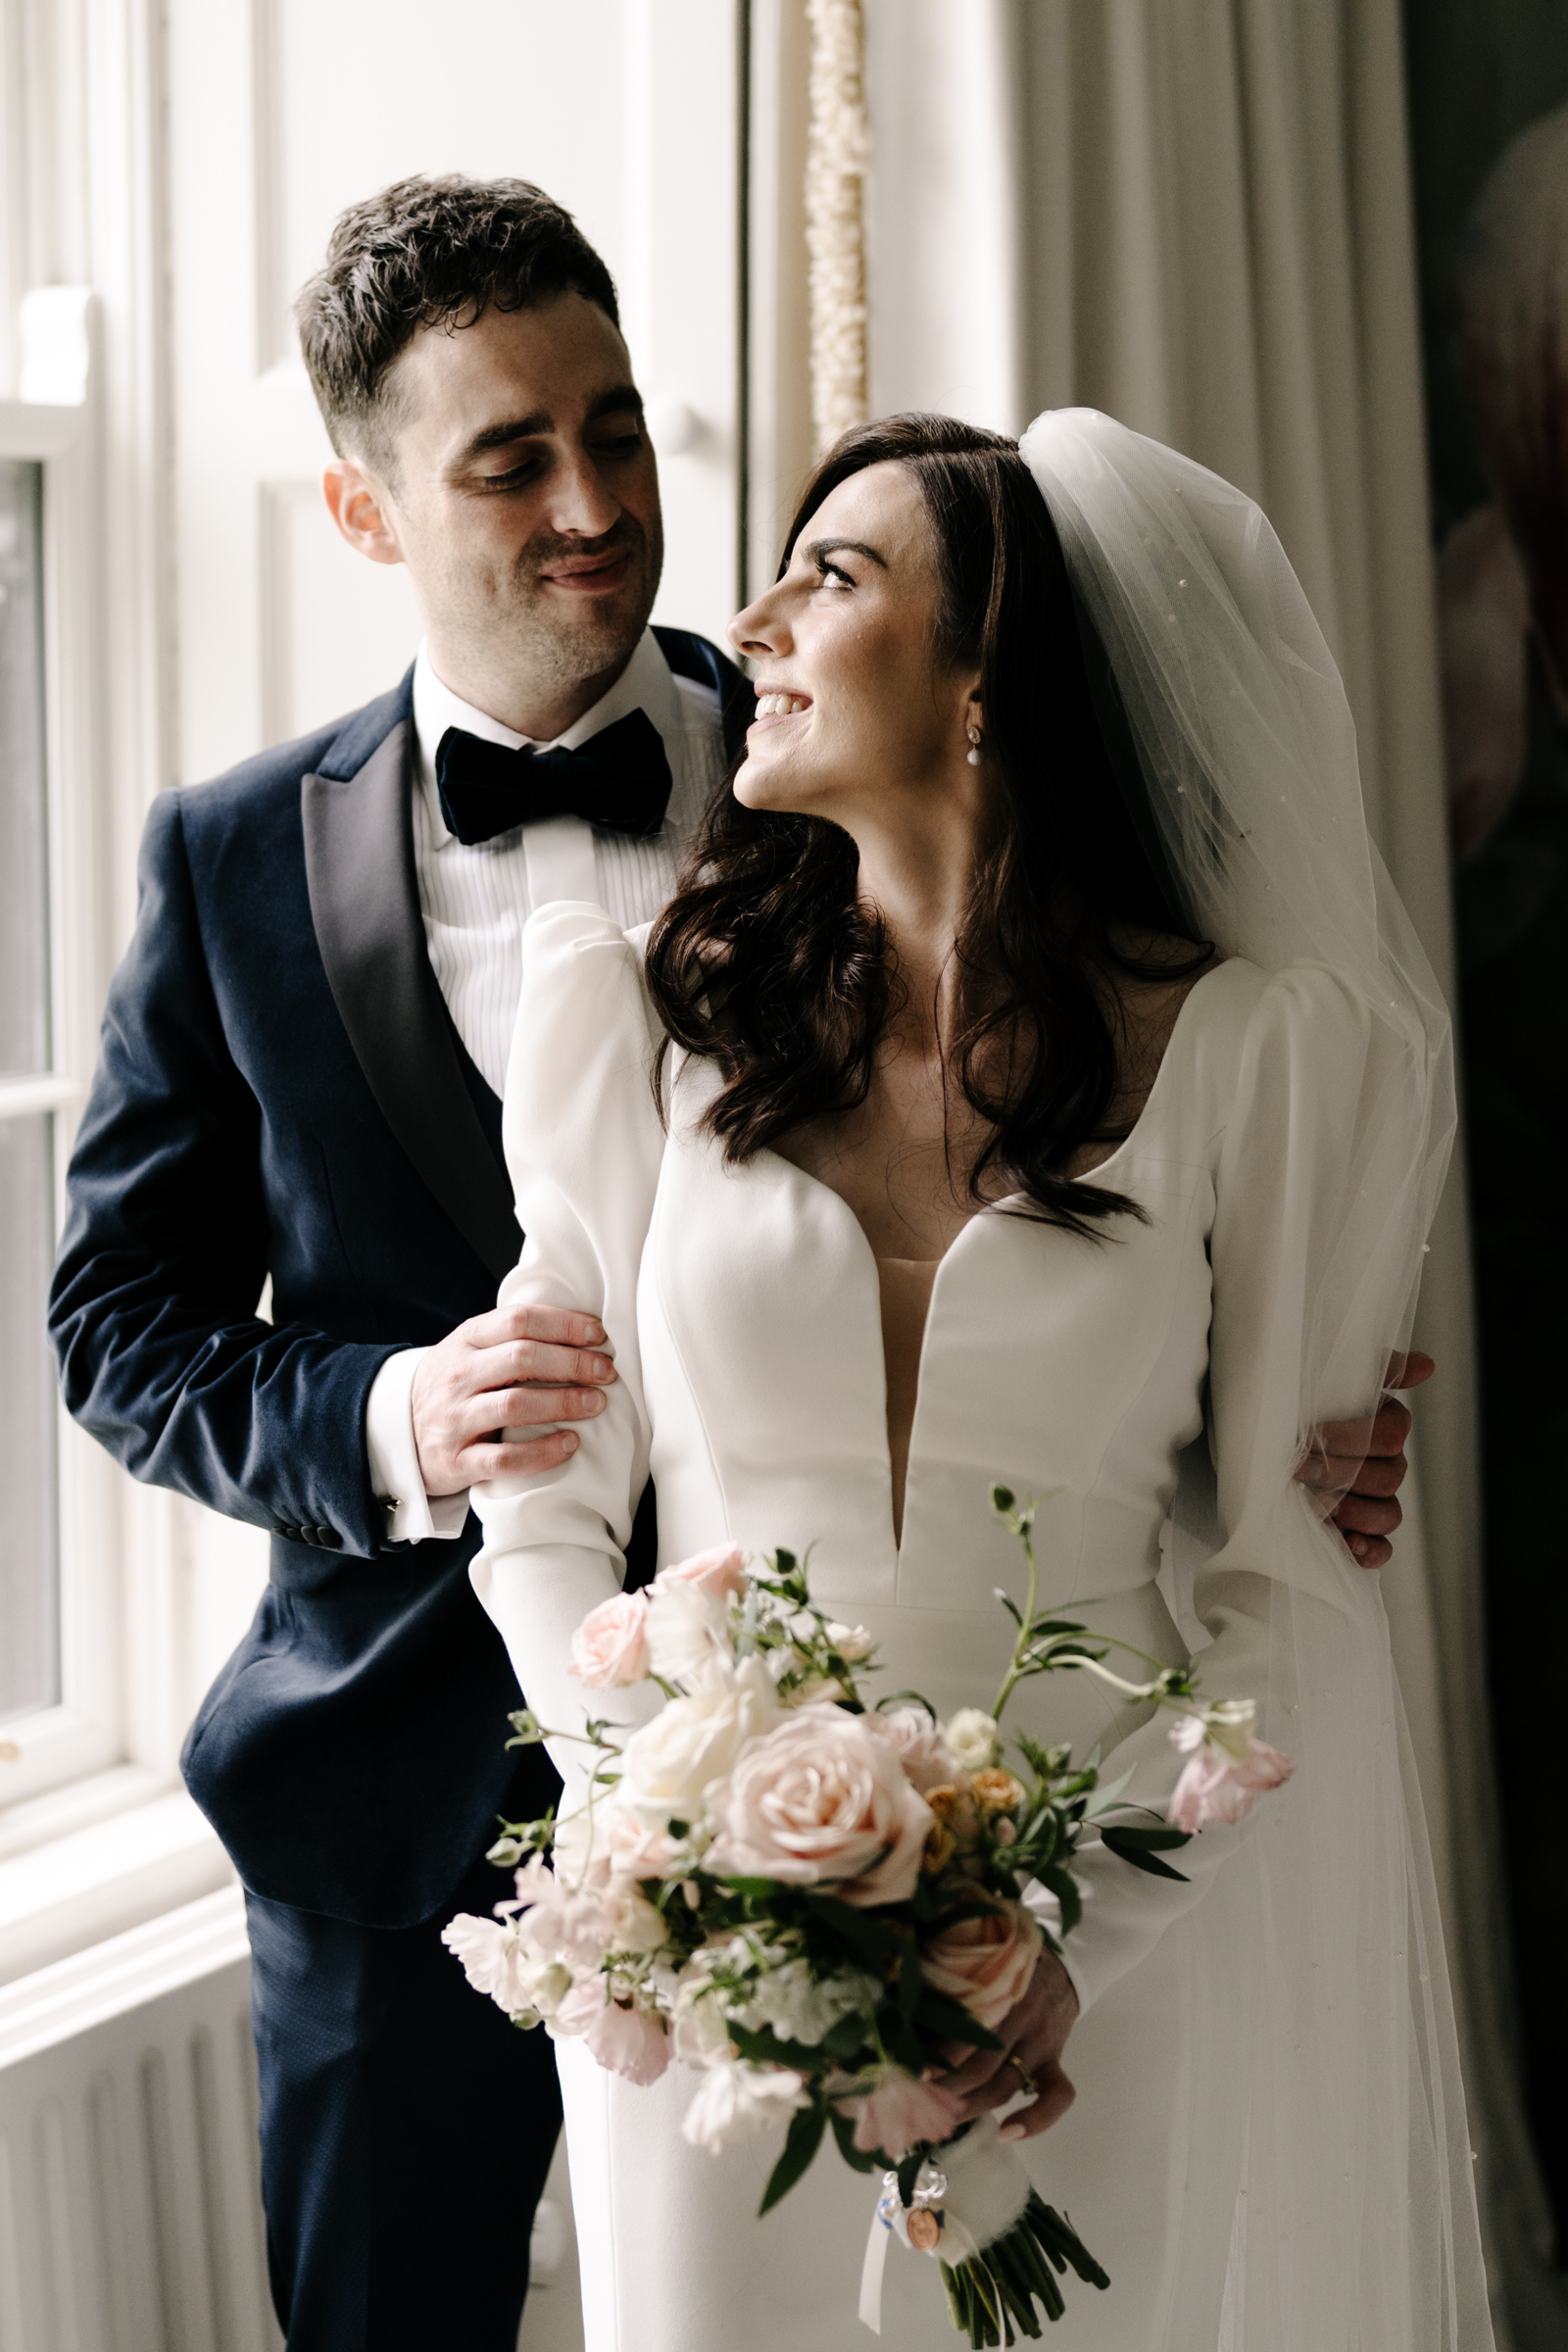 Looking for a Wedding Photographer Dublin ?